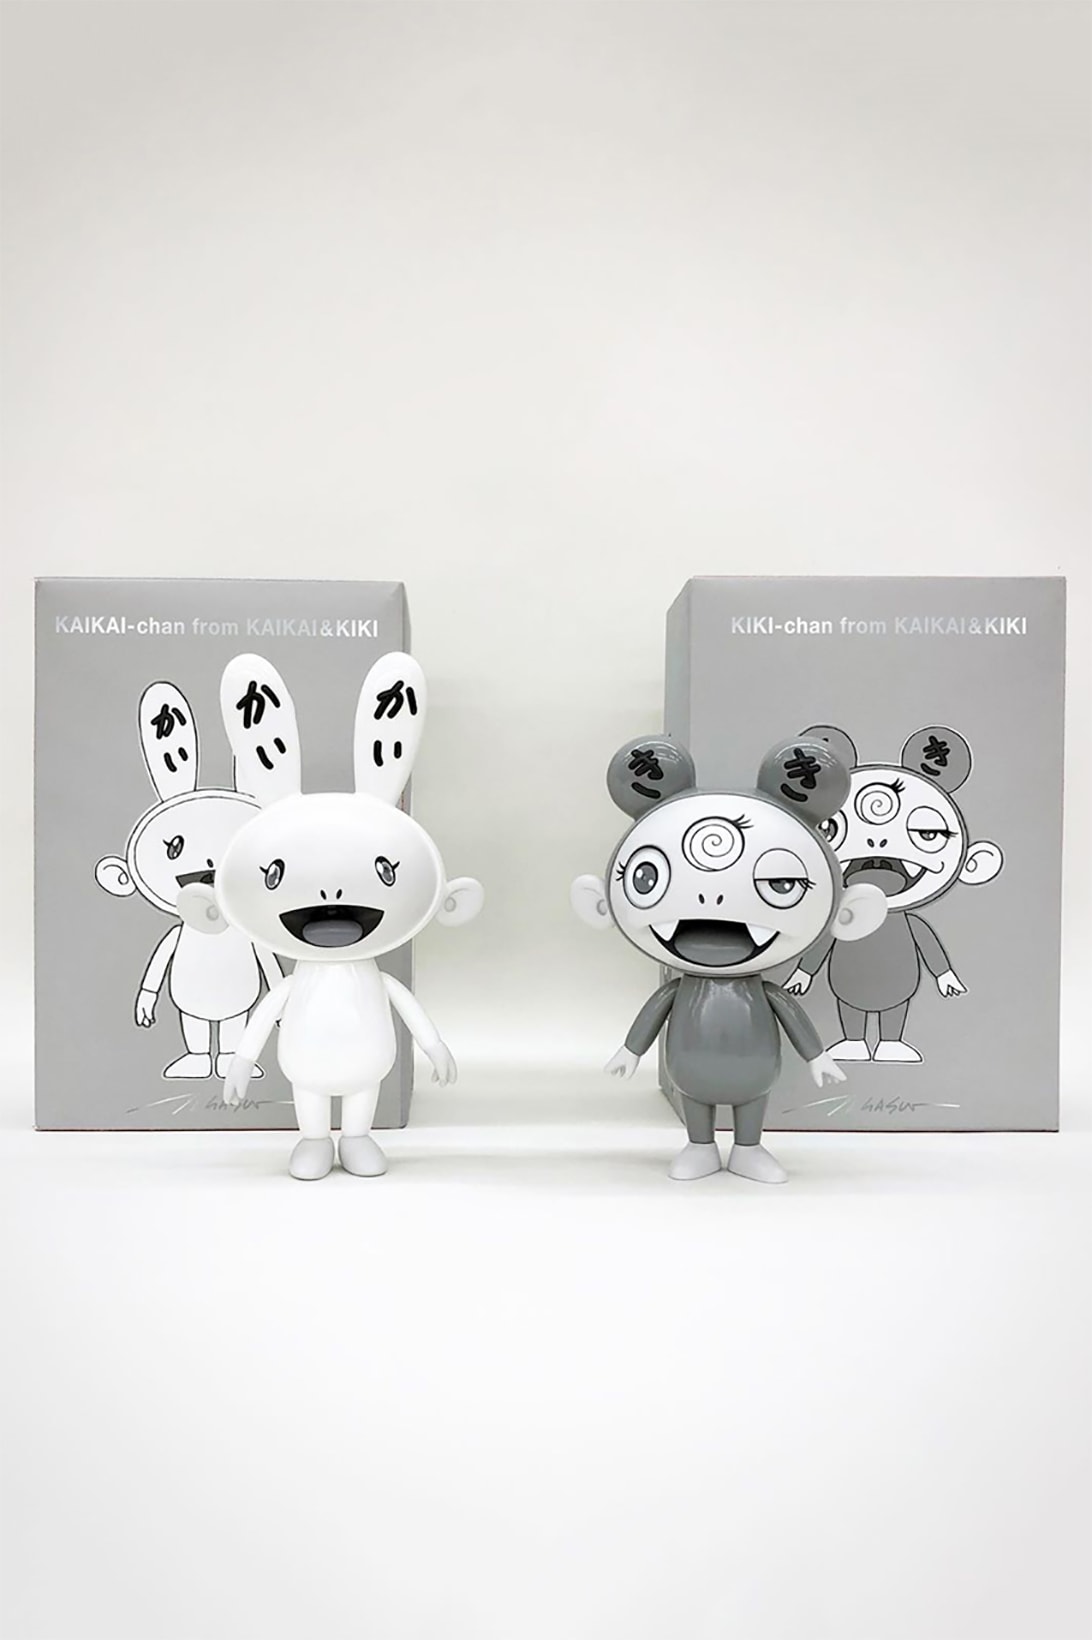 takashi murakami kaikai kiki figures black white vinyl figures art release tokyo japan artist